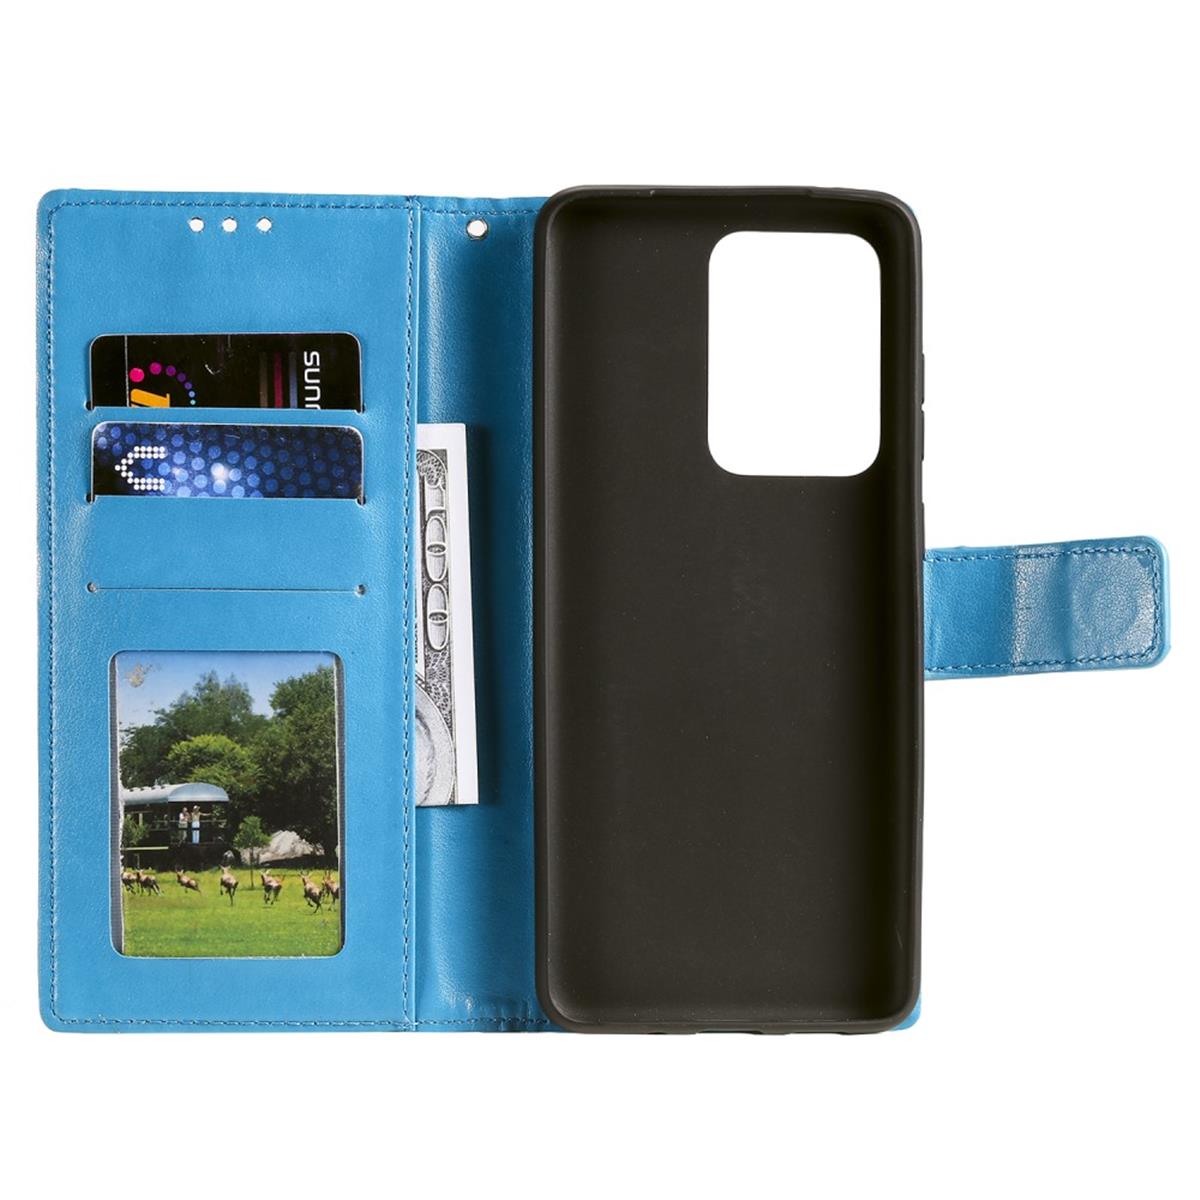 Hülle für Samsung Galaxy Note20 Ultra Handyhülle Flip Case Cover Mandala Blau